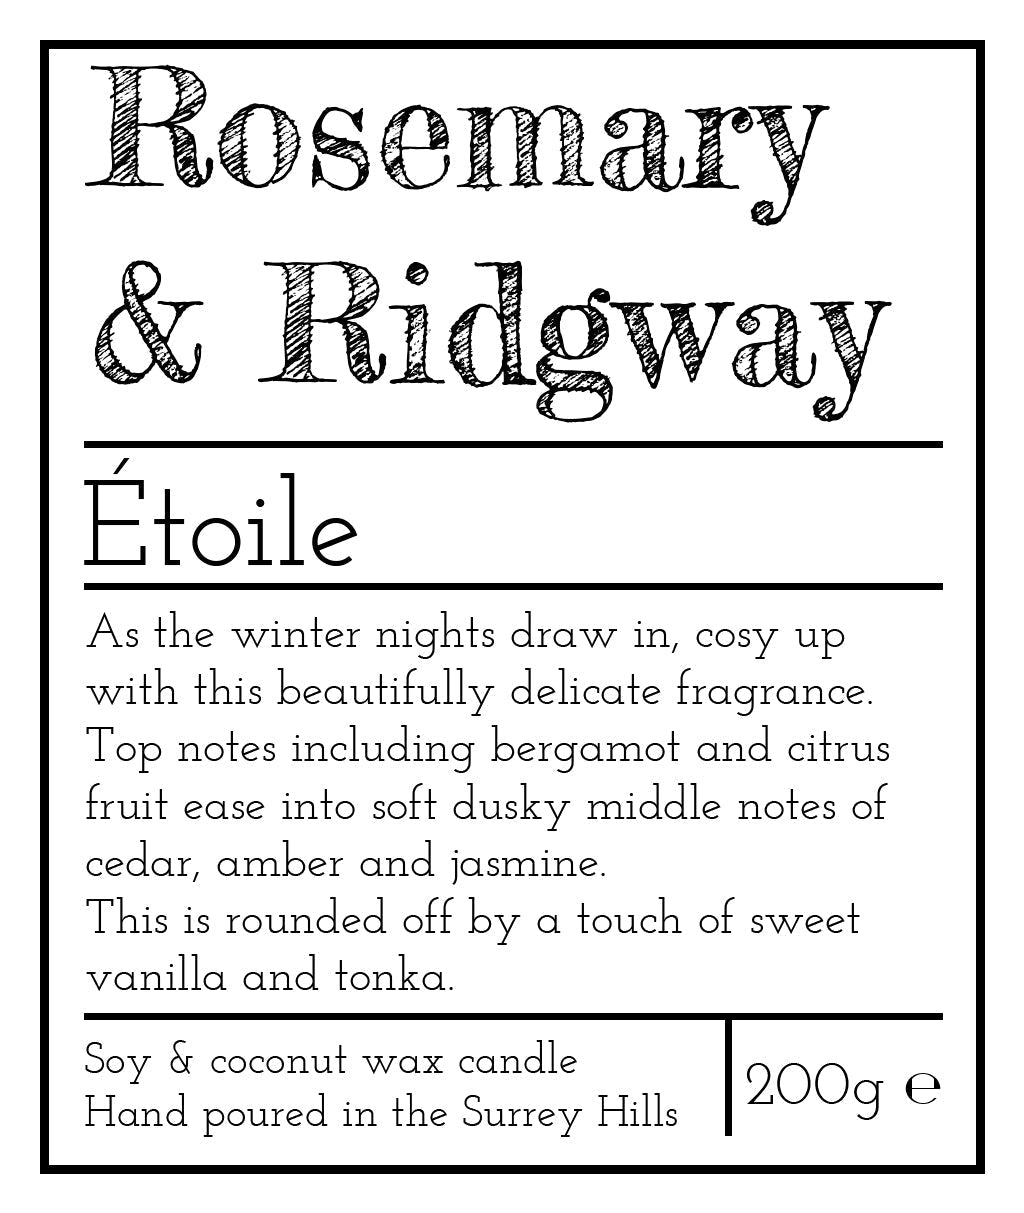 Étoile Rosemary & Ridgway